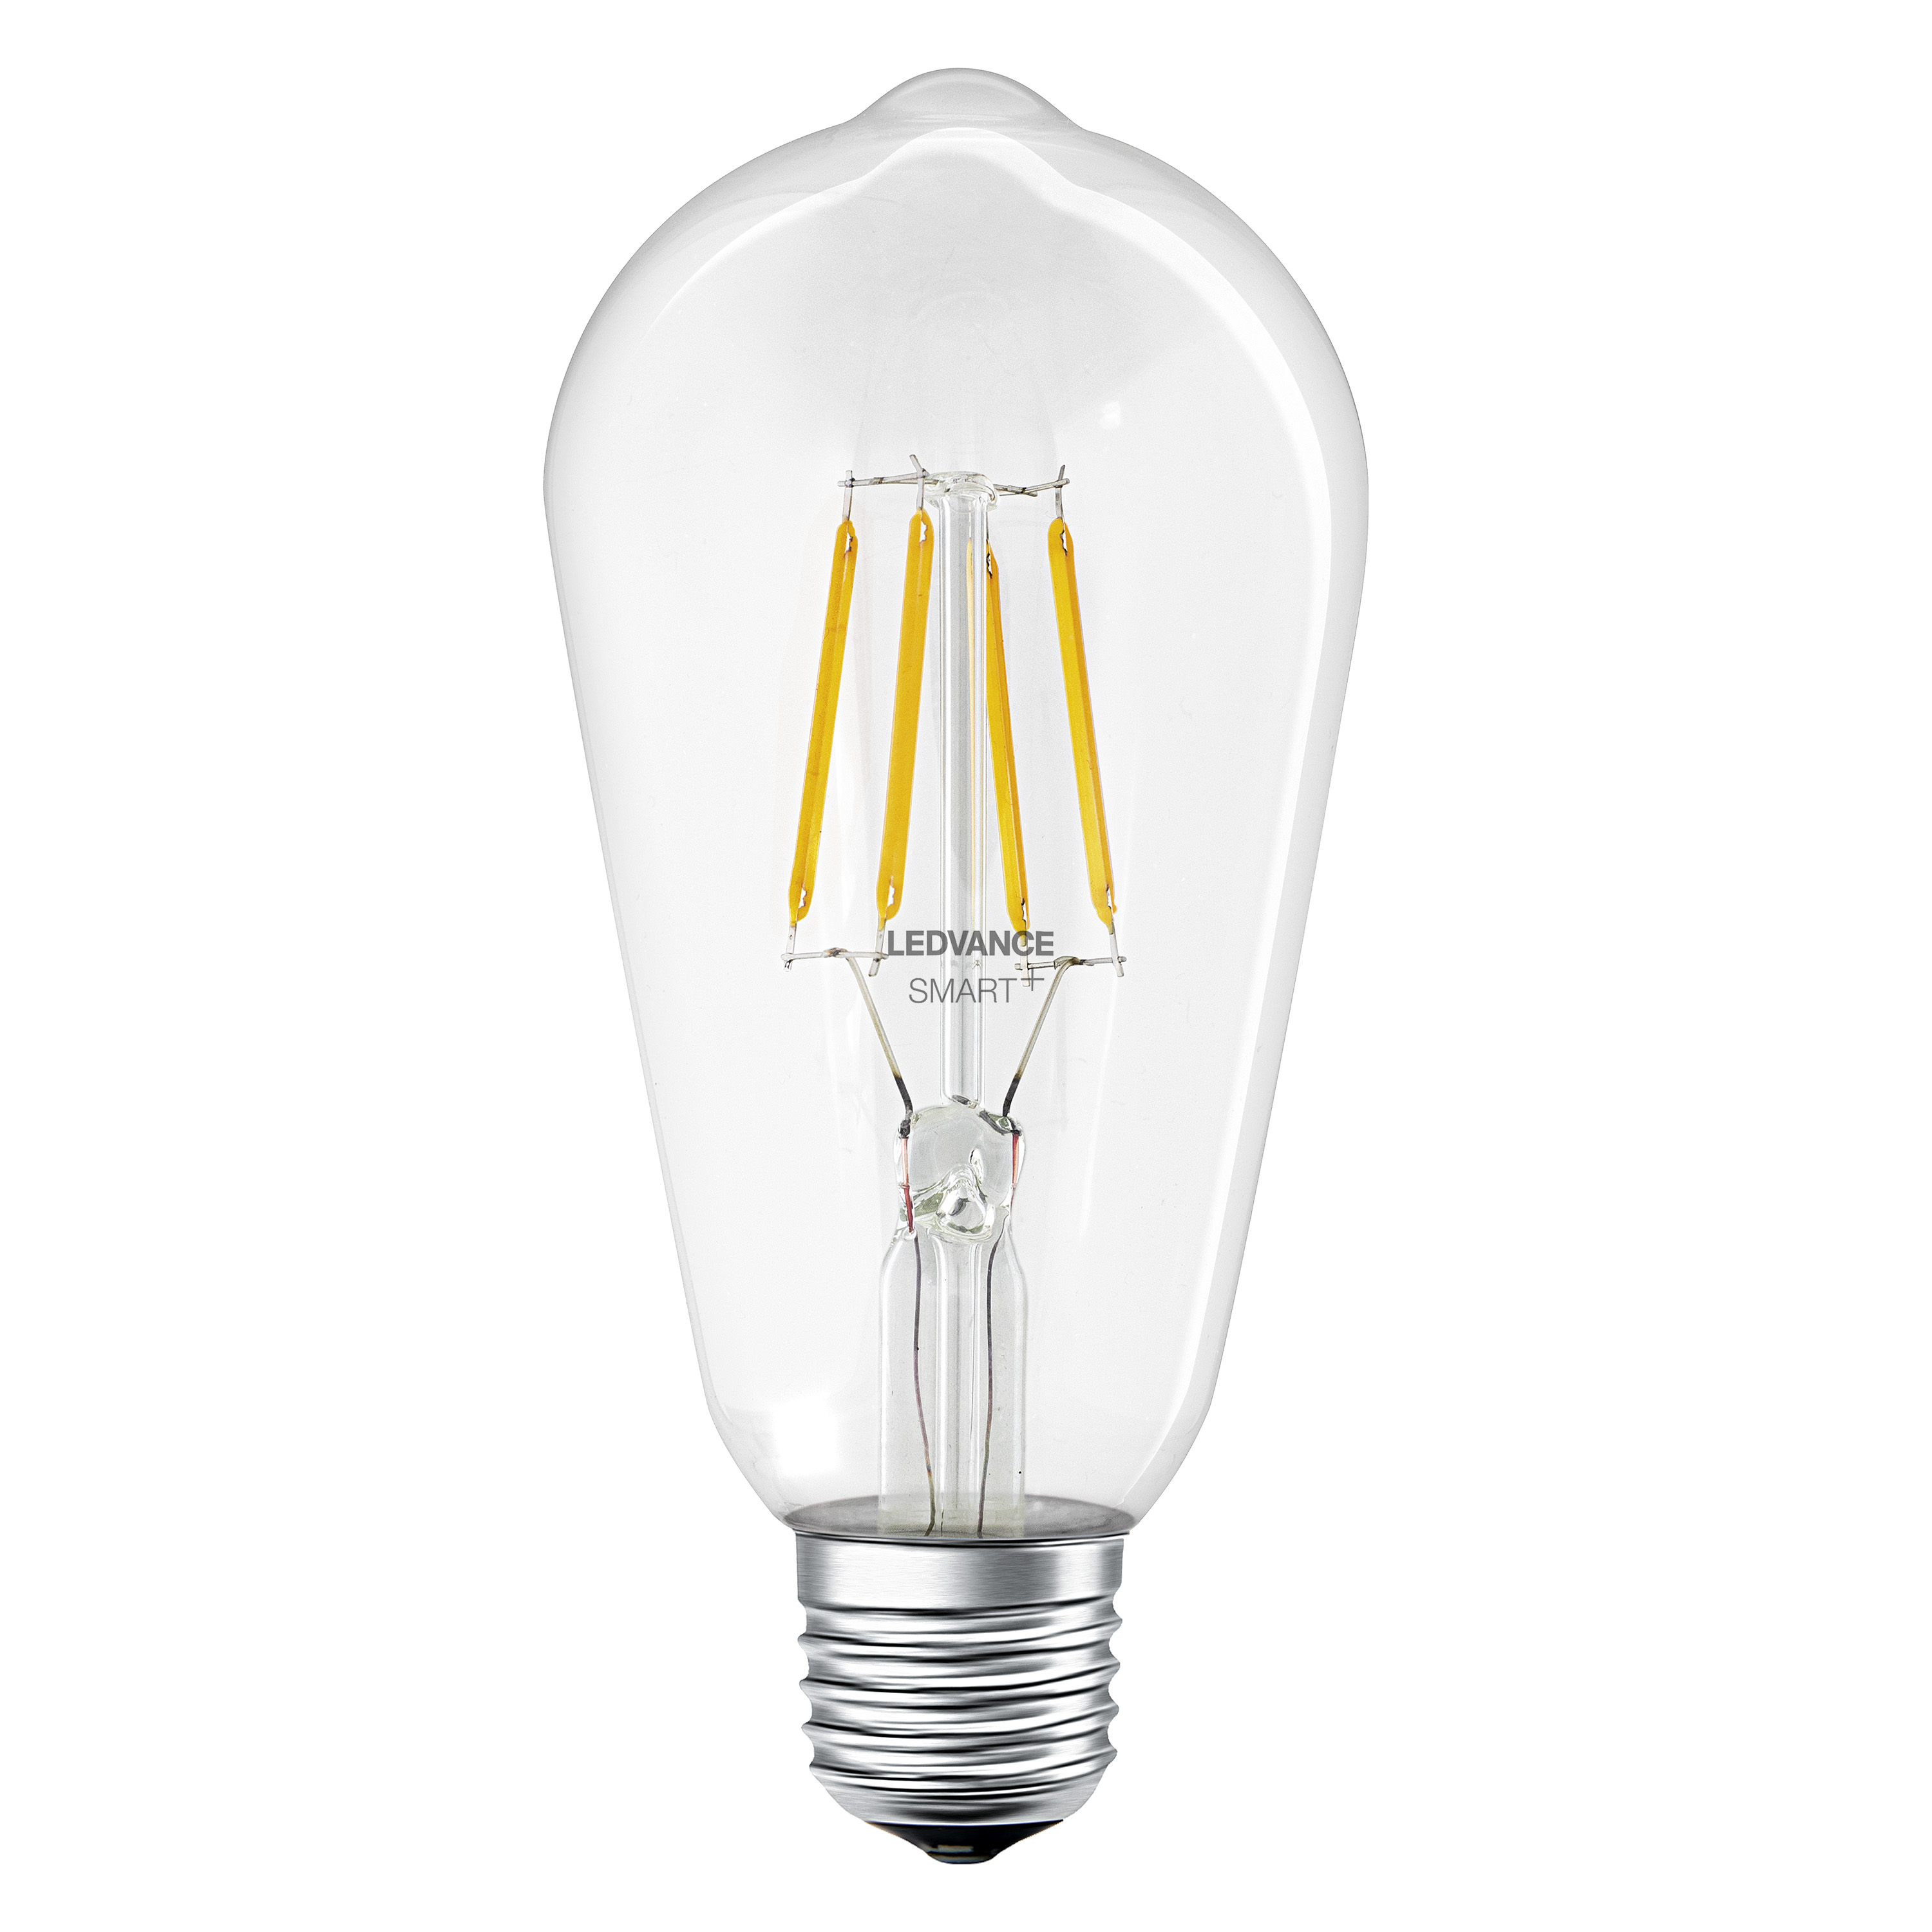 LEDVANCE SMART+ Filament Edison Kaltweiß Lampe Dimmable LED